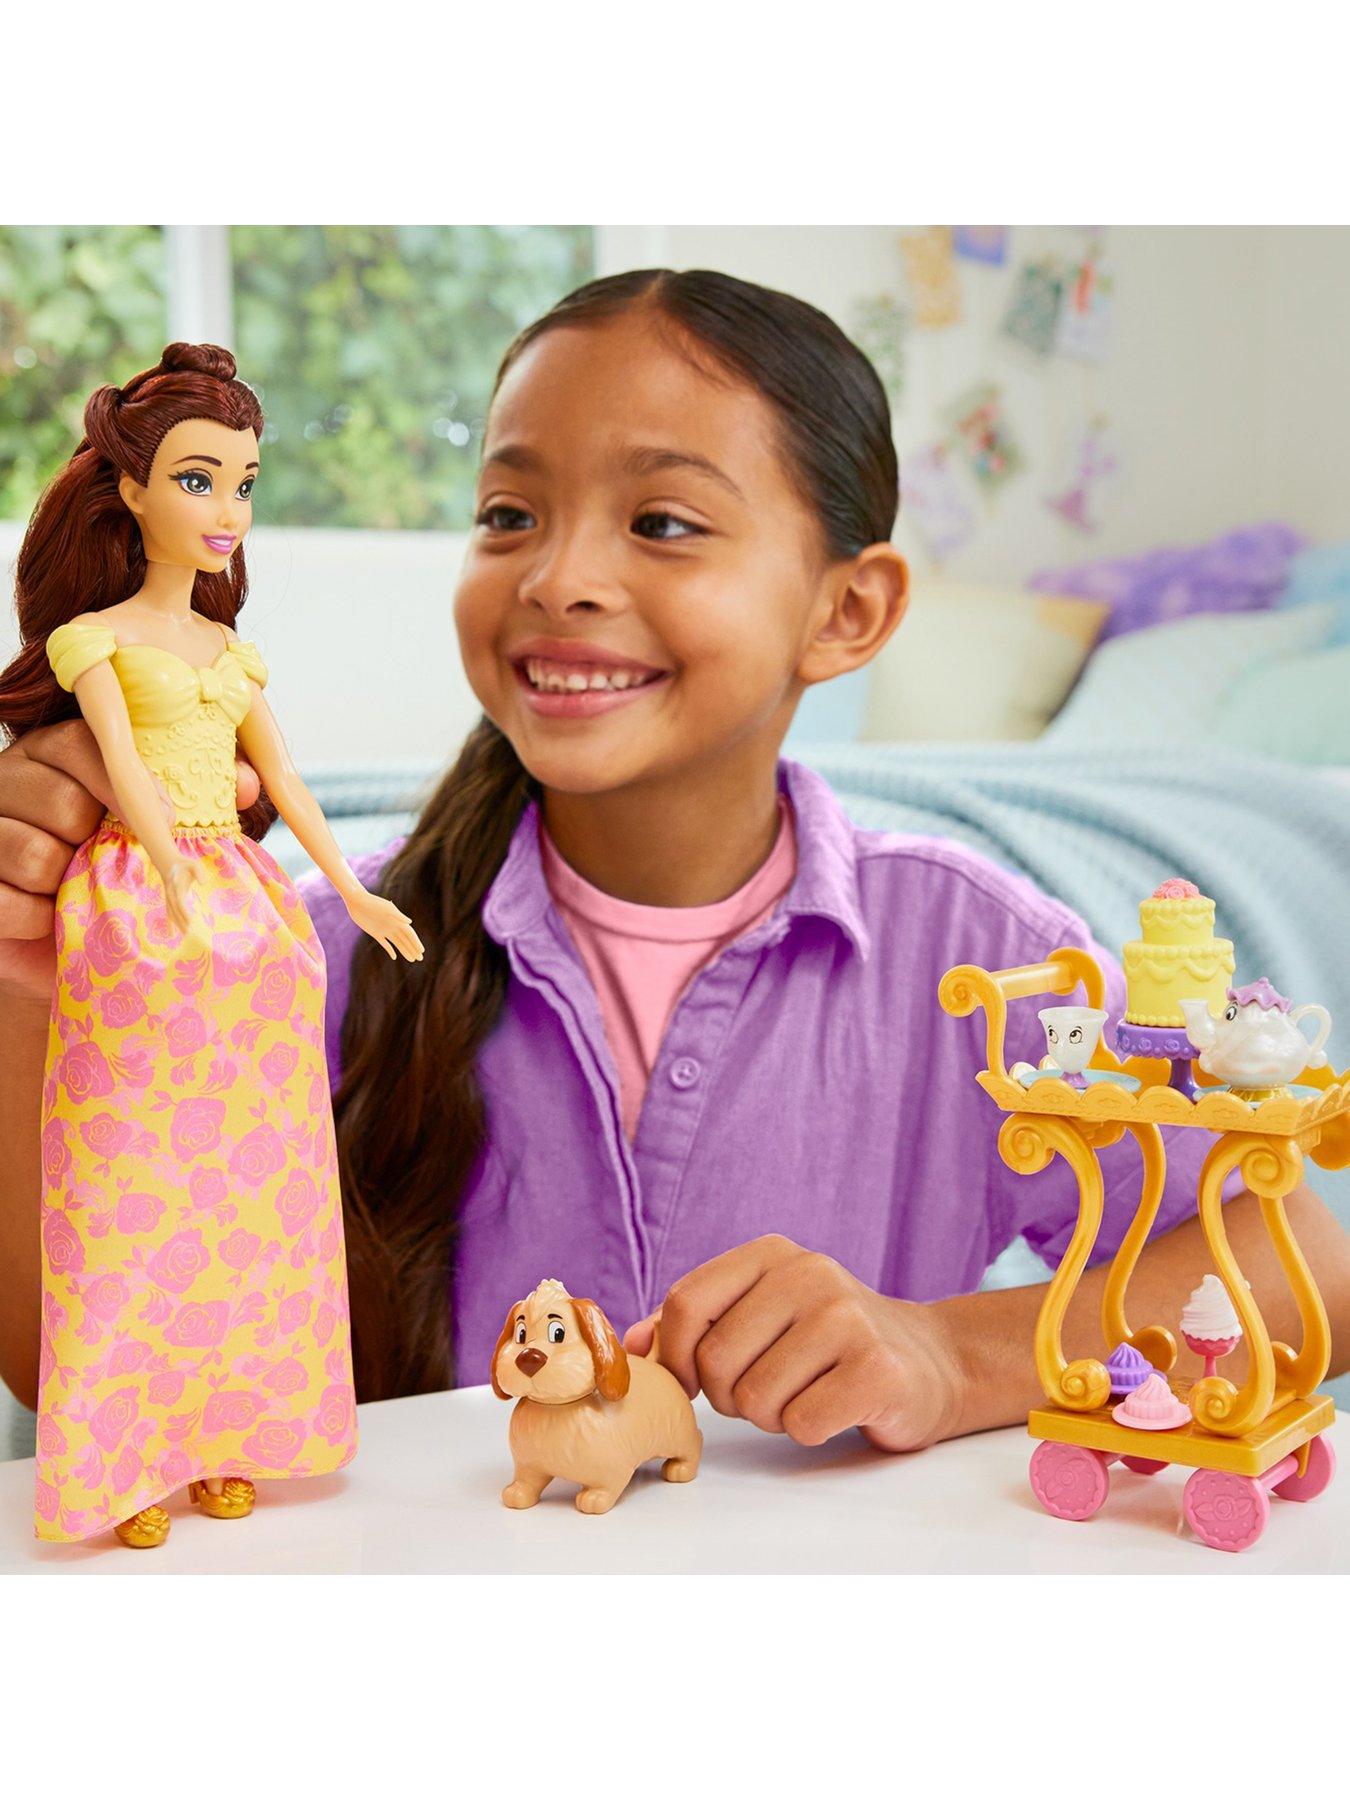 Disney Princess Belle's Tea Time Cart Doll and Playset | littlewoods.com